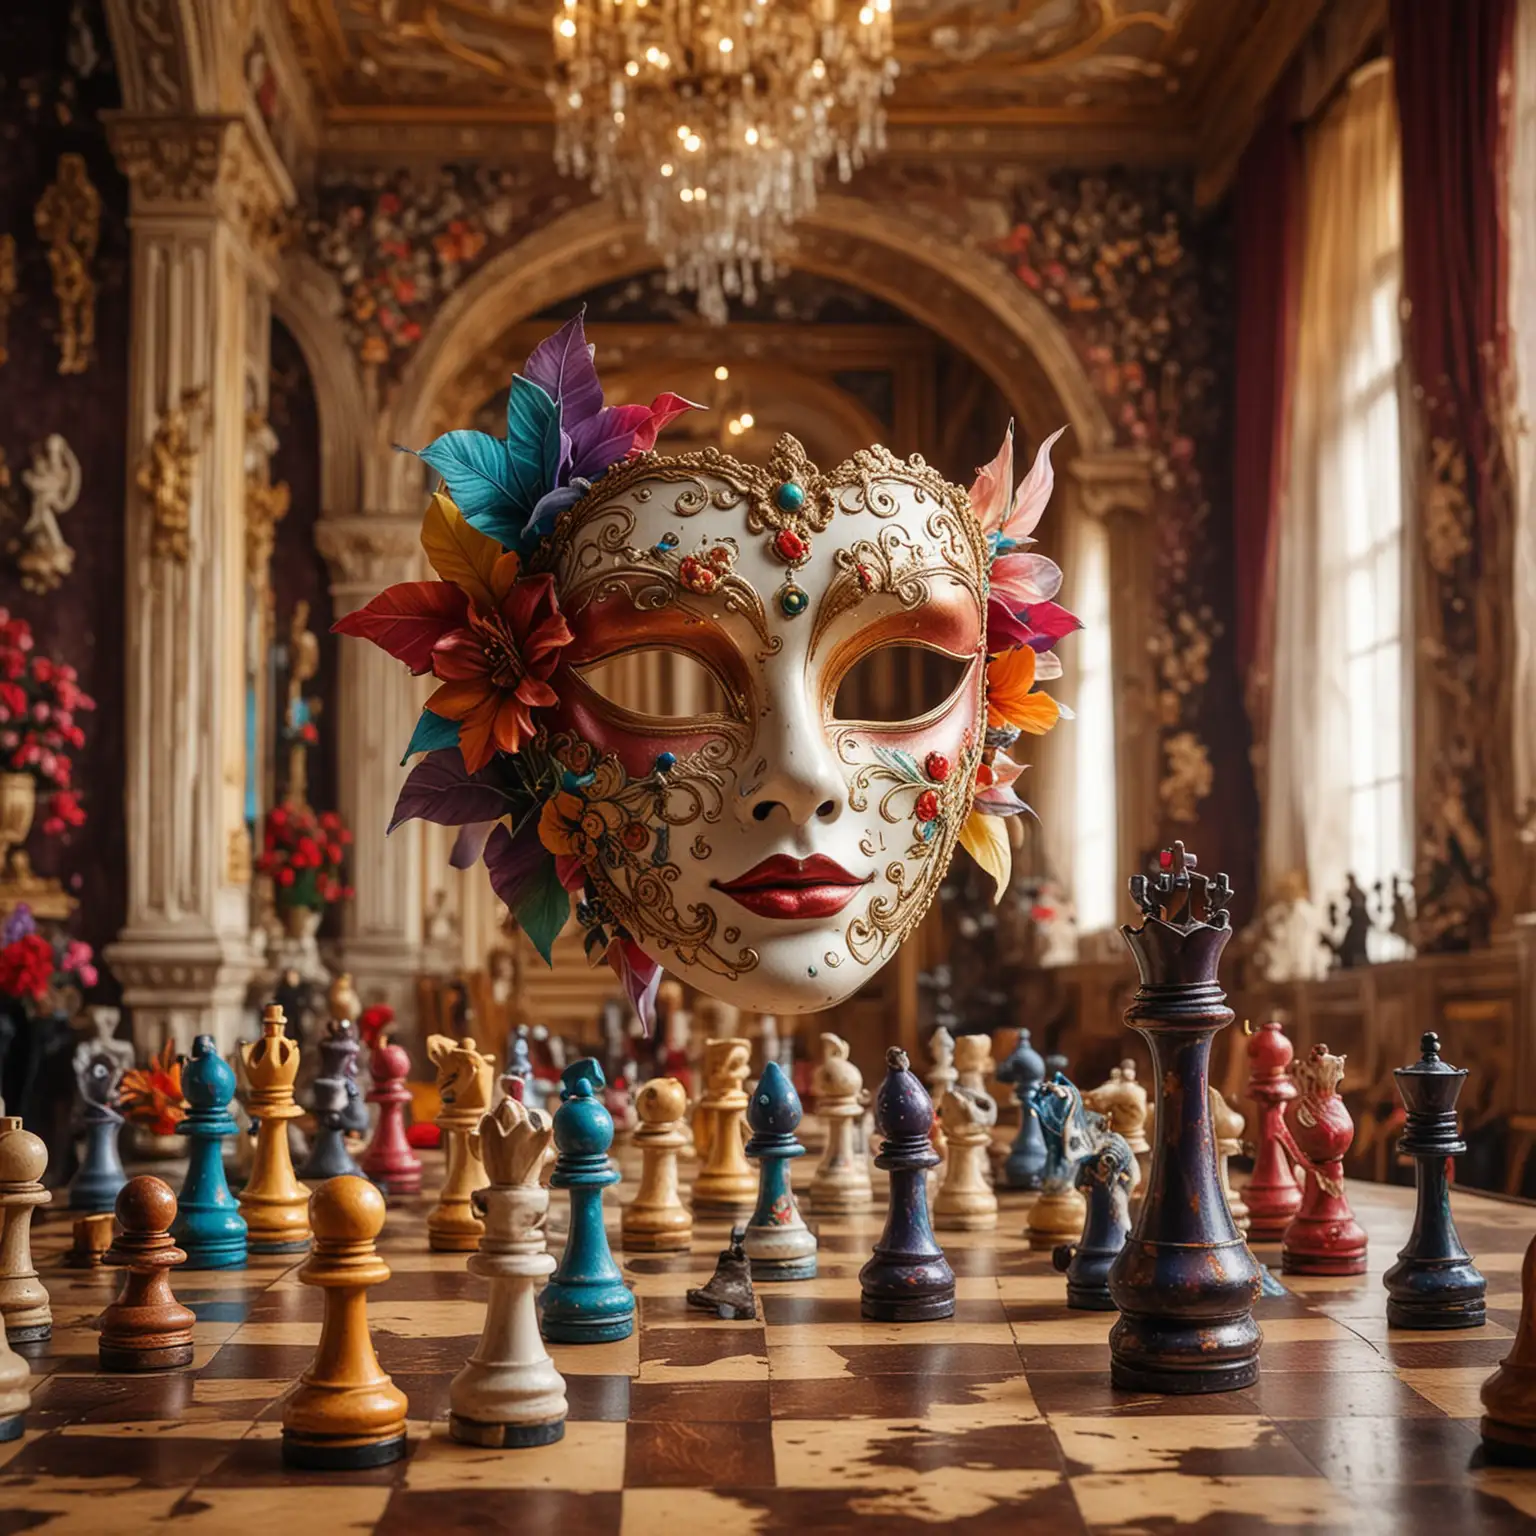 Floral-Carnival-Mask-and-Chess-Figures-Elegant-Ballroom-Fantasy